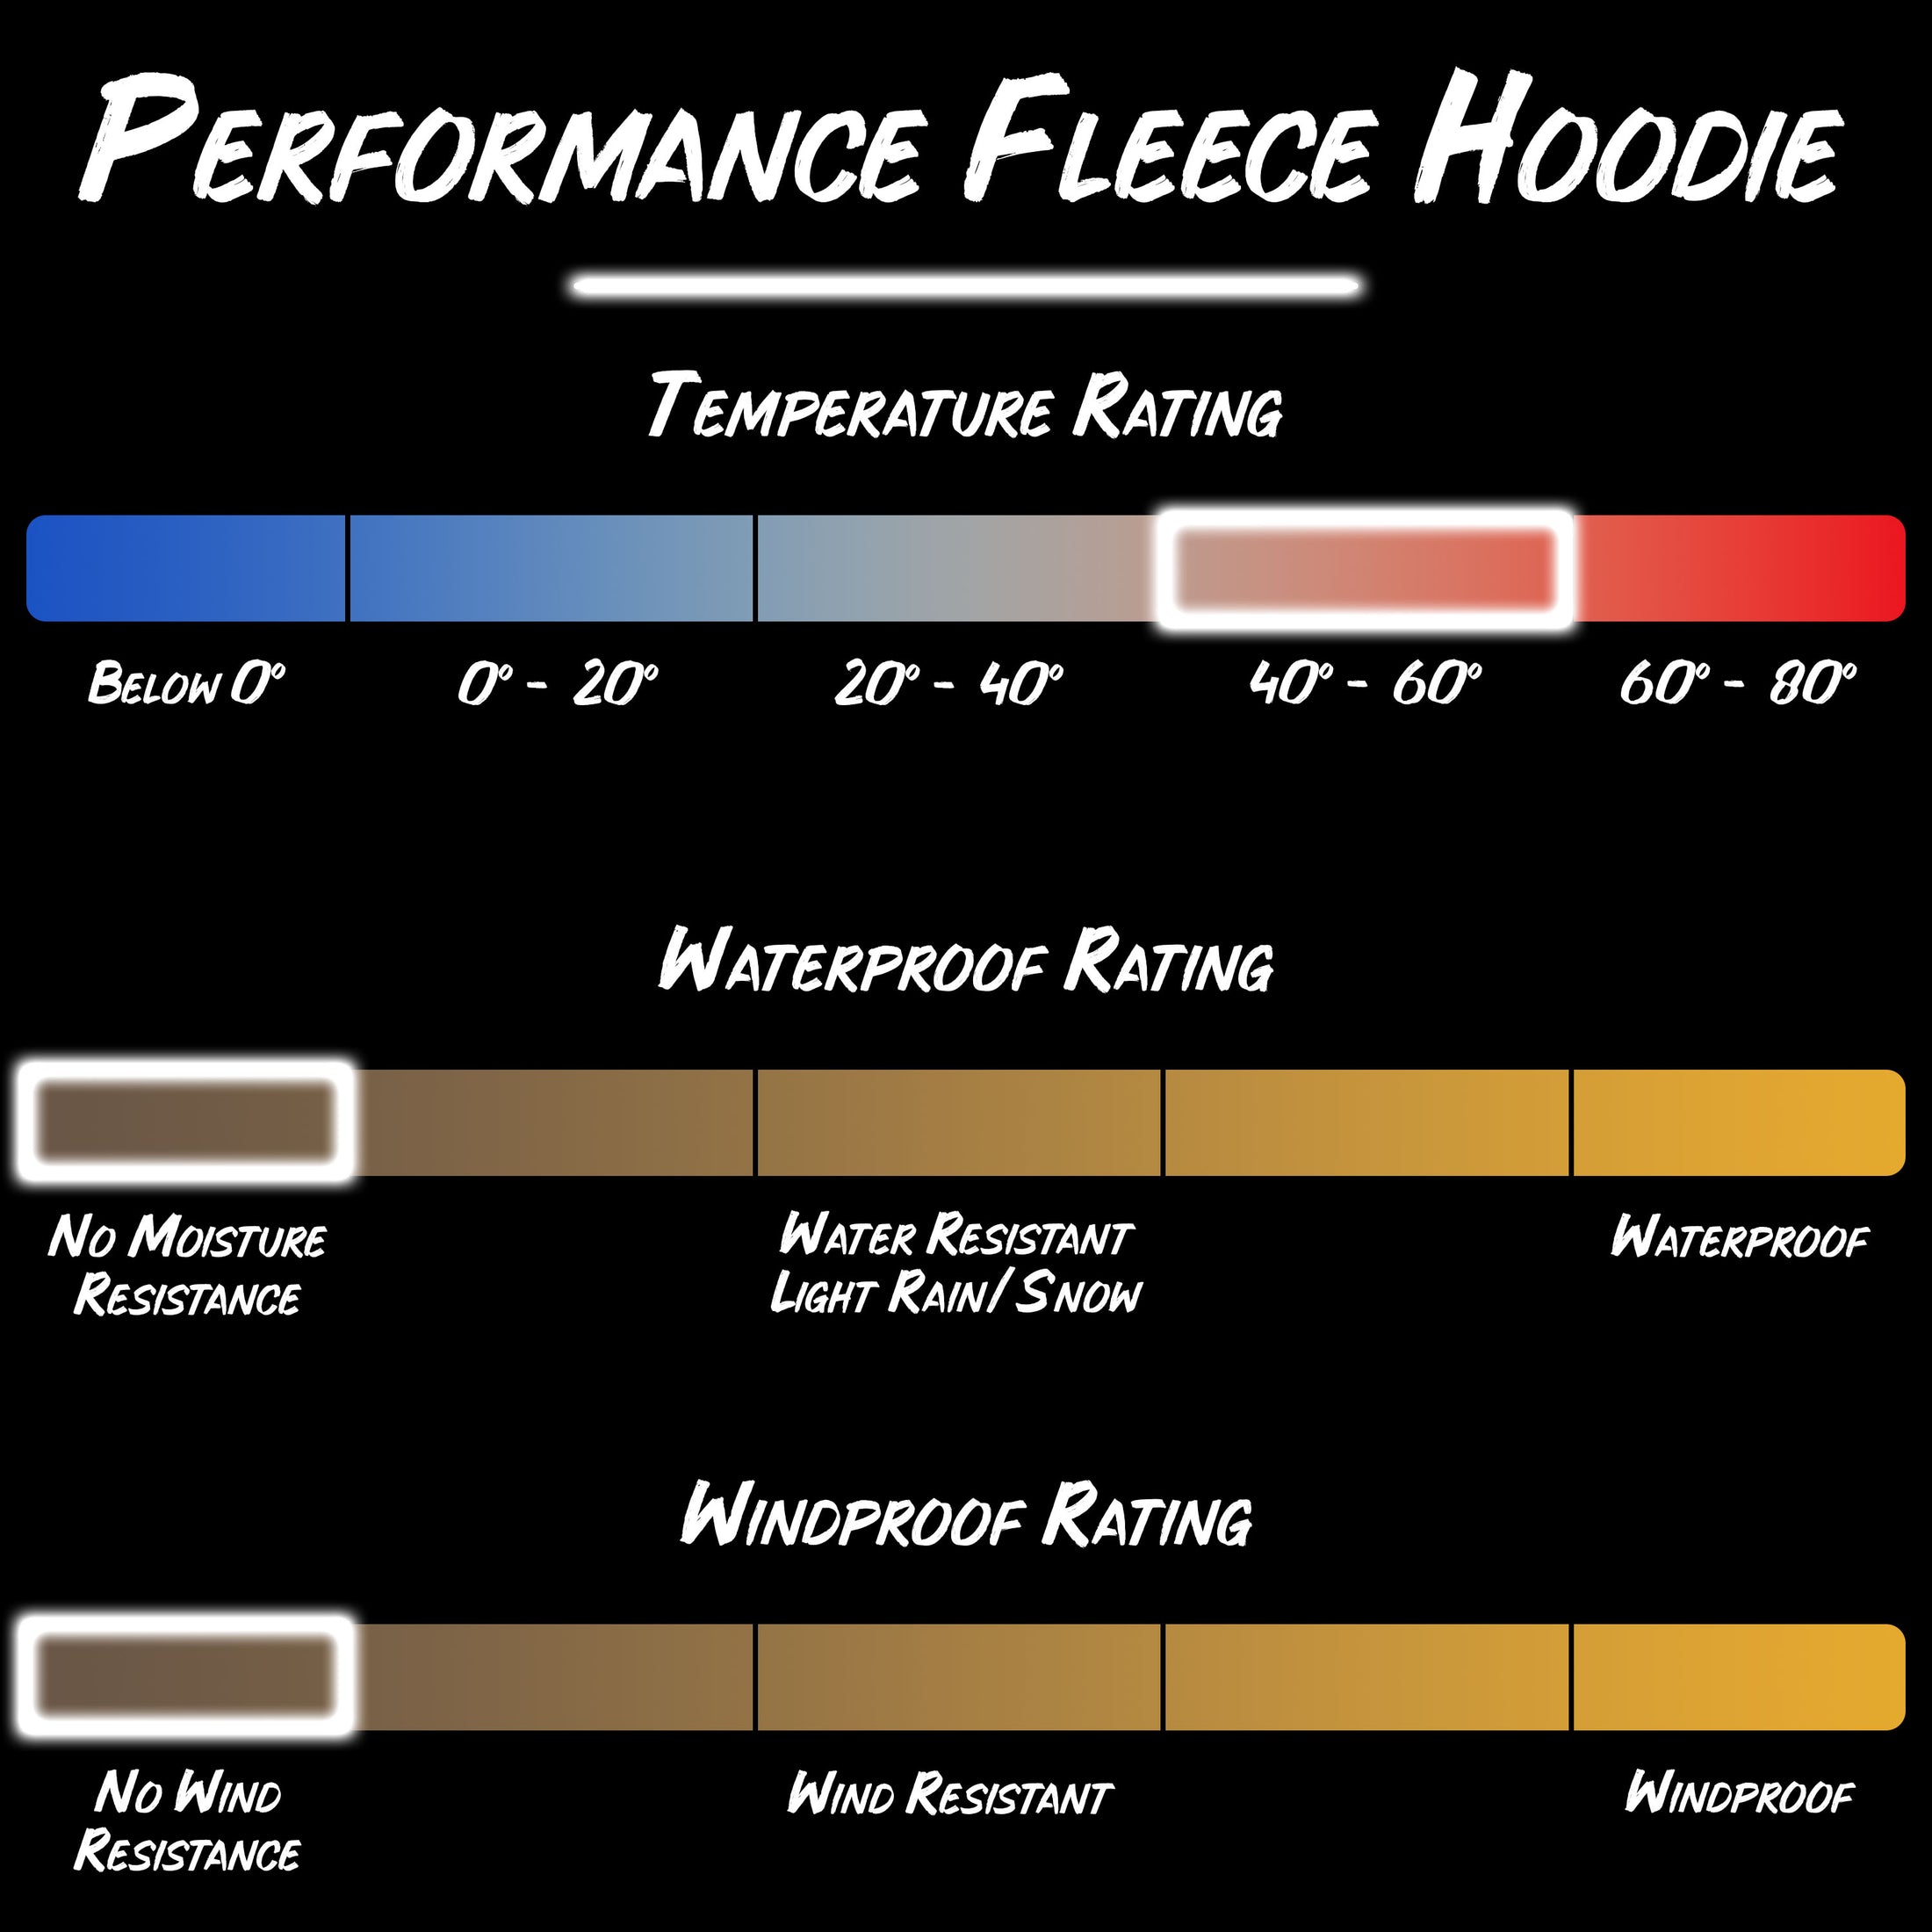 Gamehide performance fleece hoodie product specifications